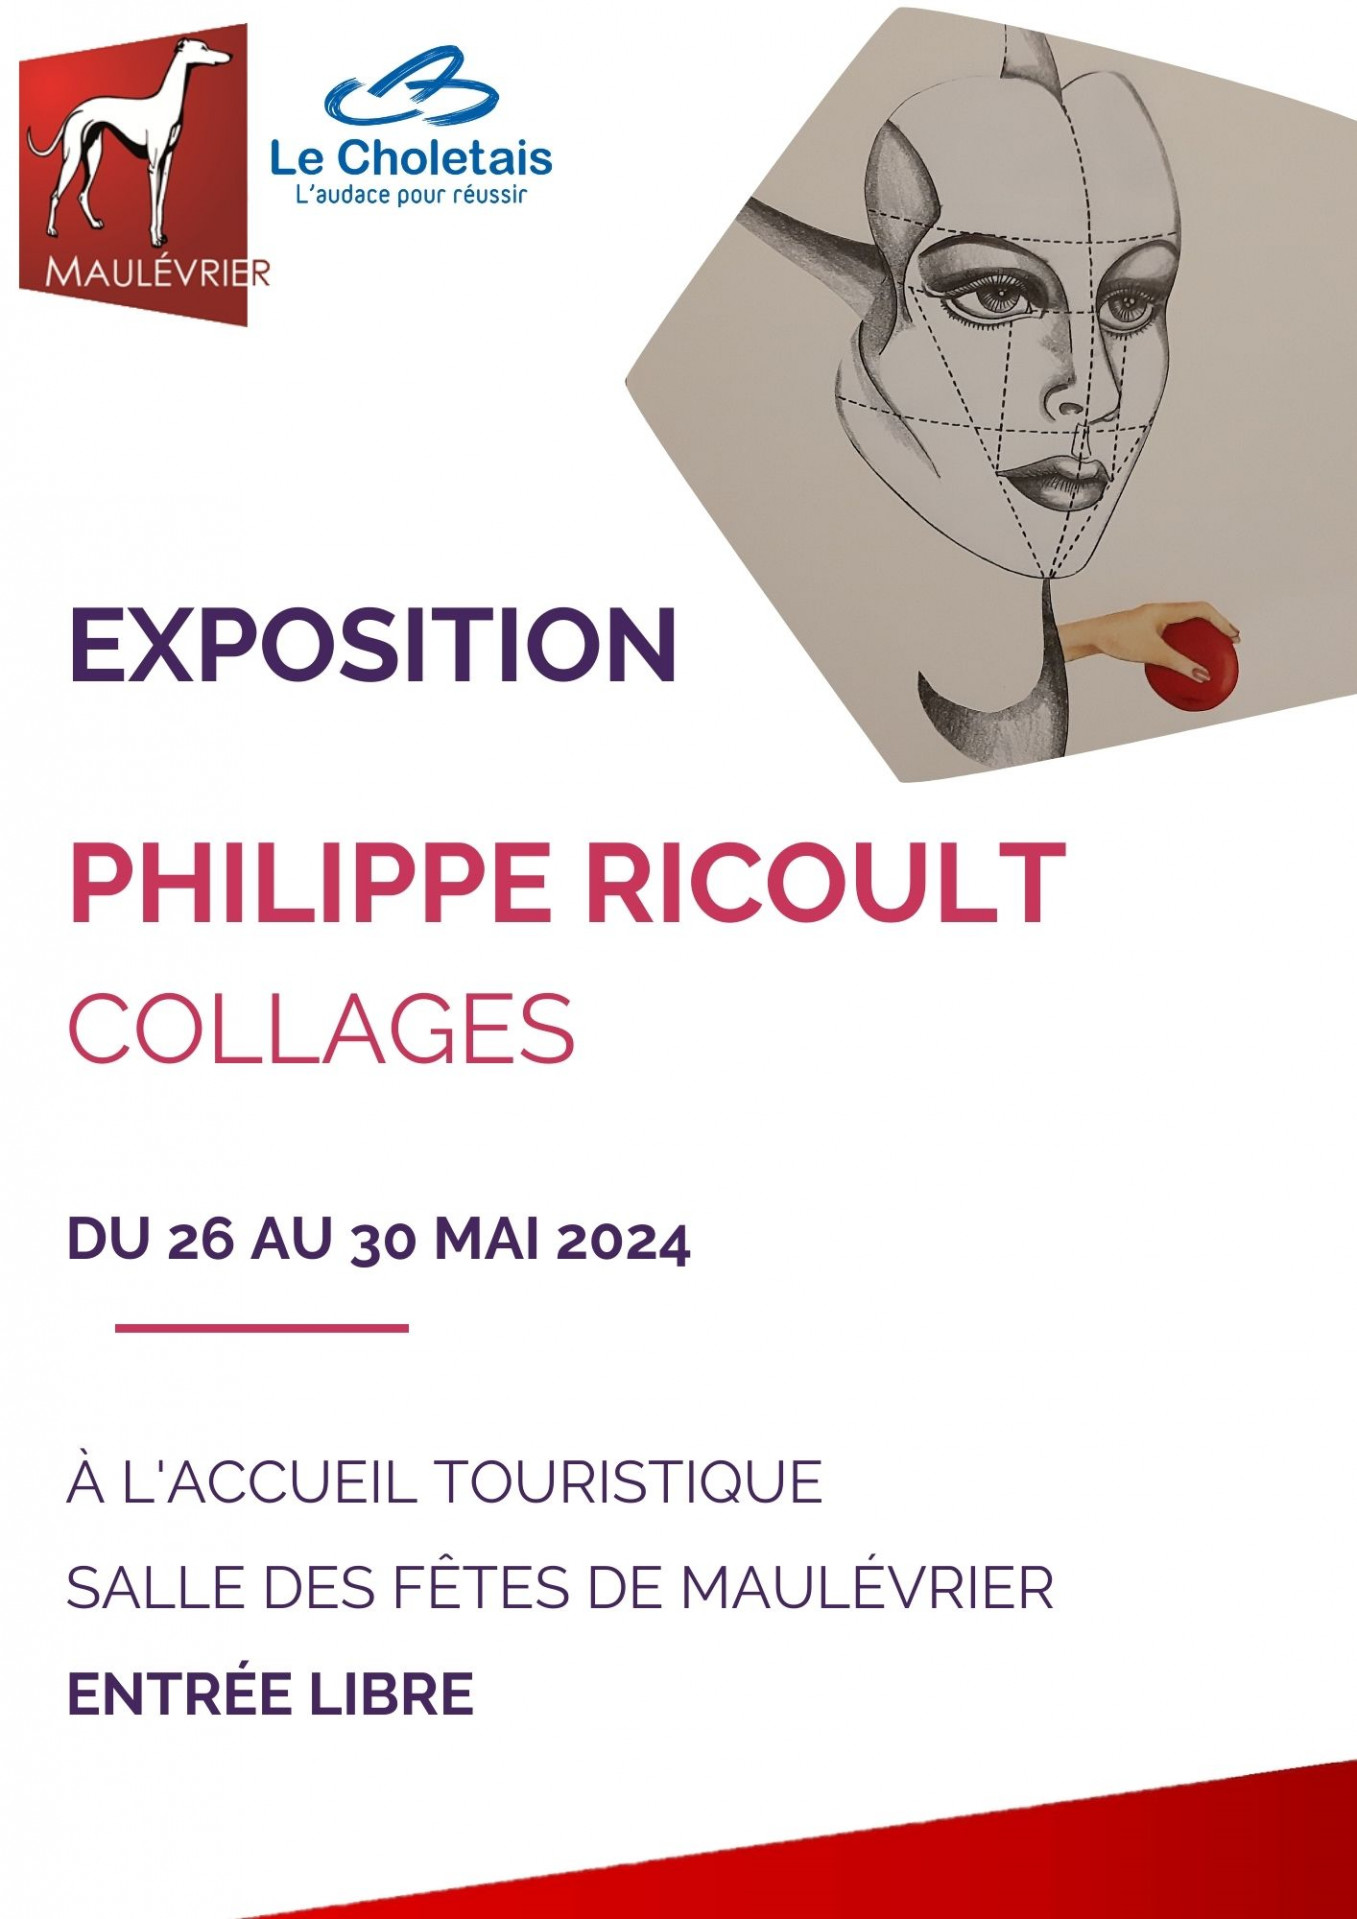 Exposition de Philippe RICOULT, collages